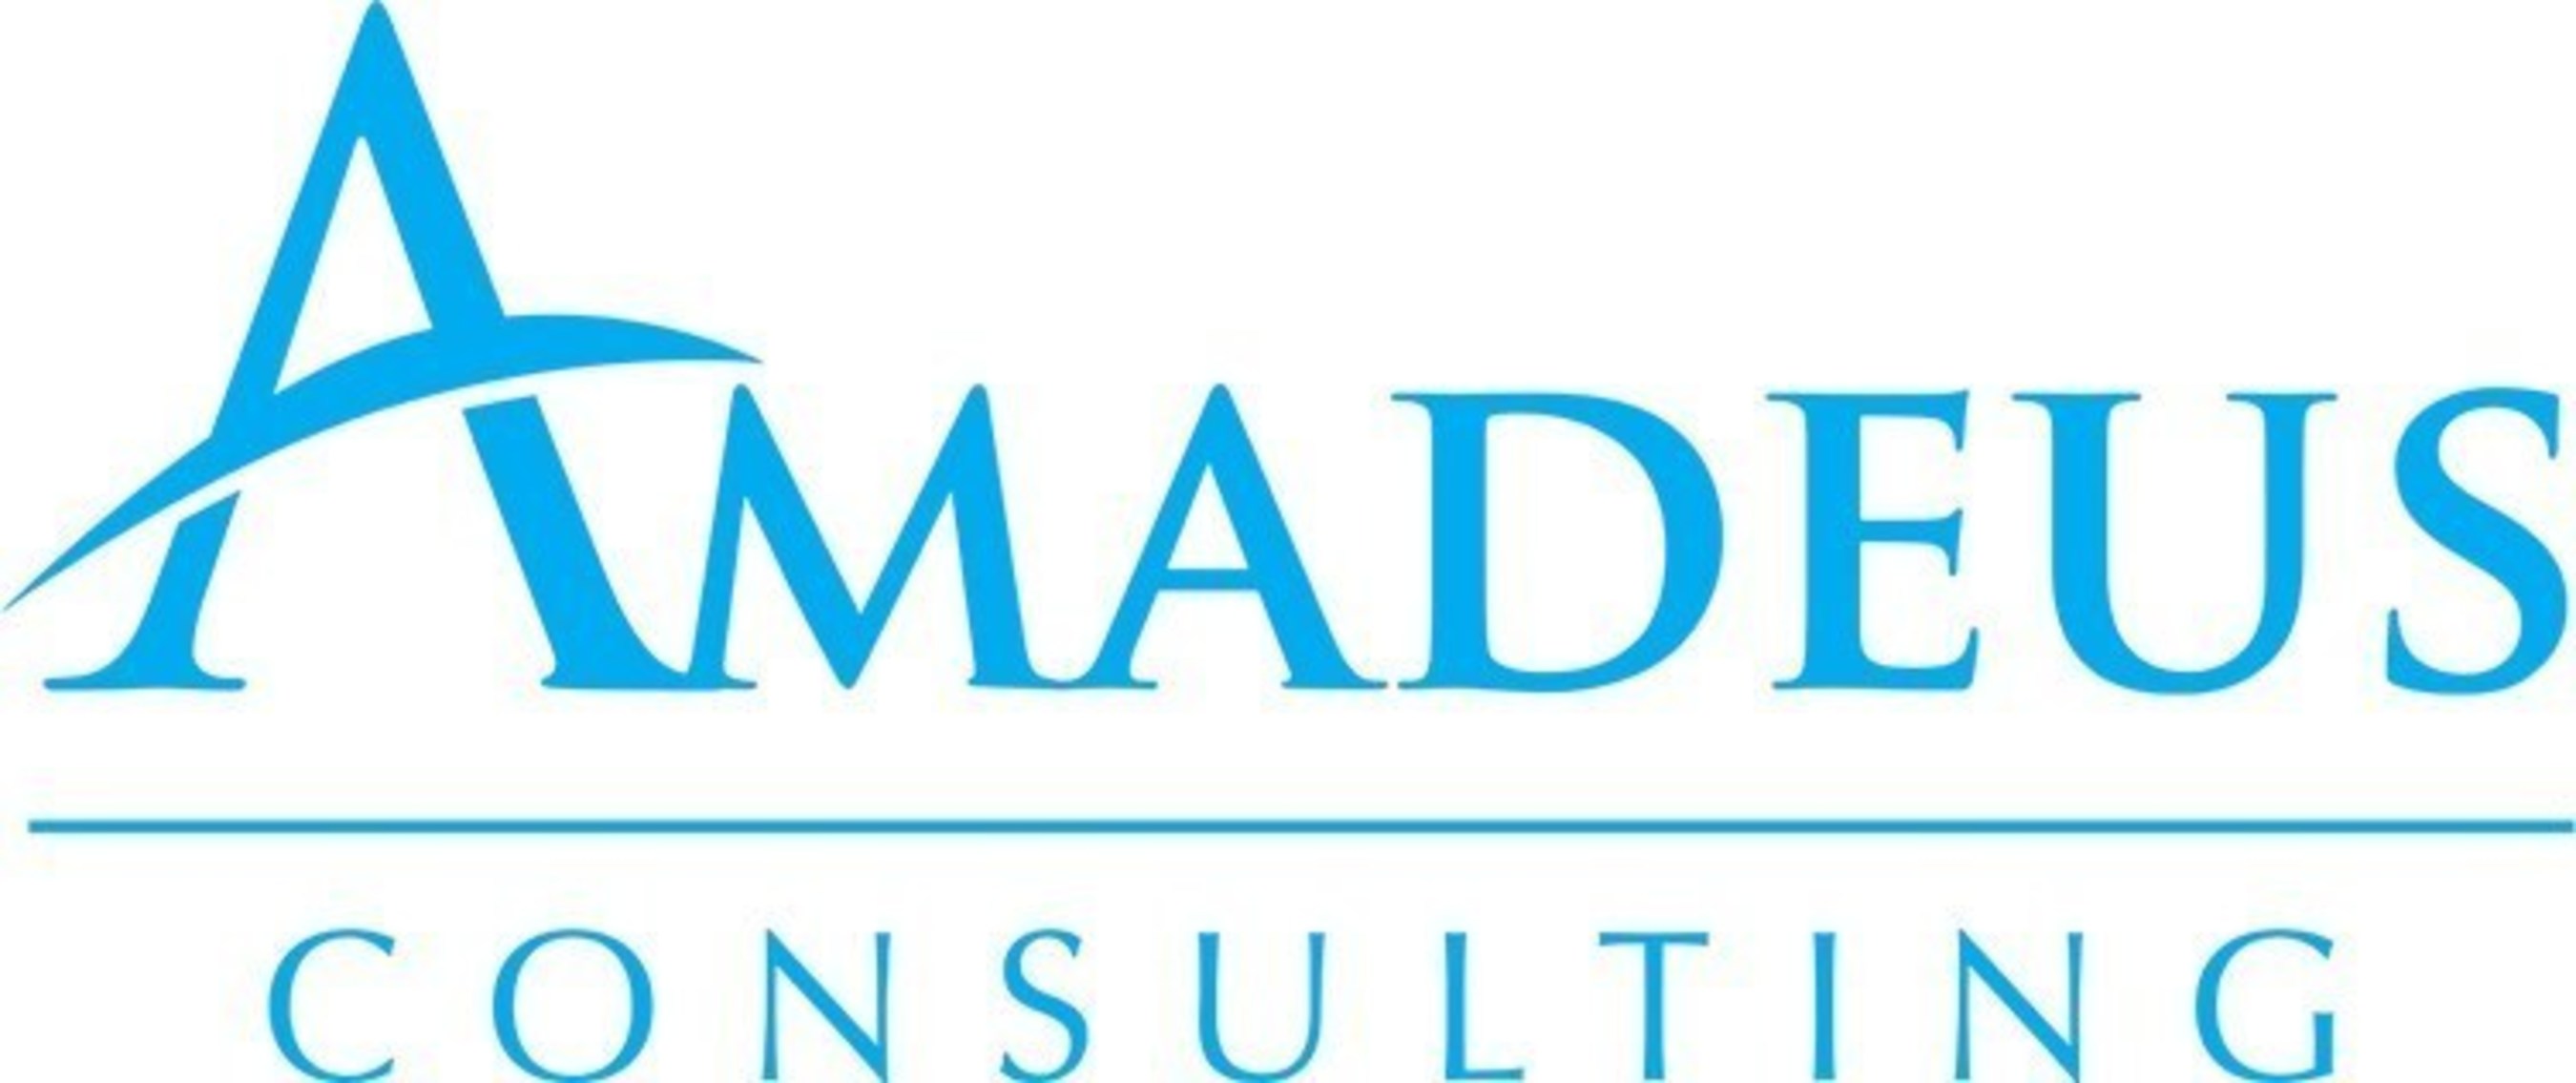 Amadeus news release logo